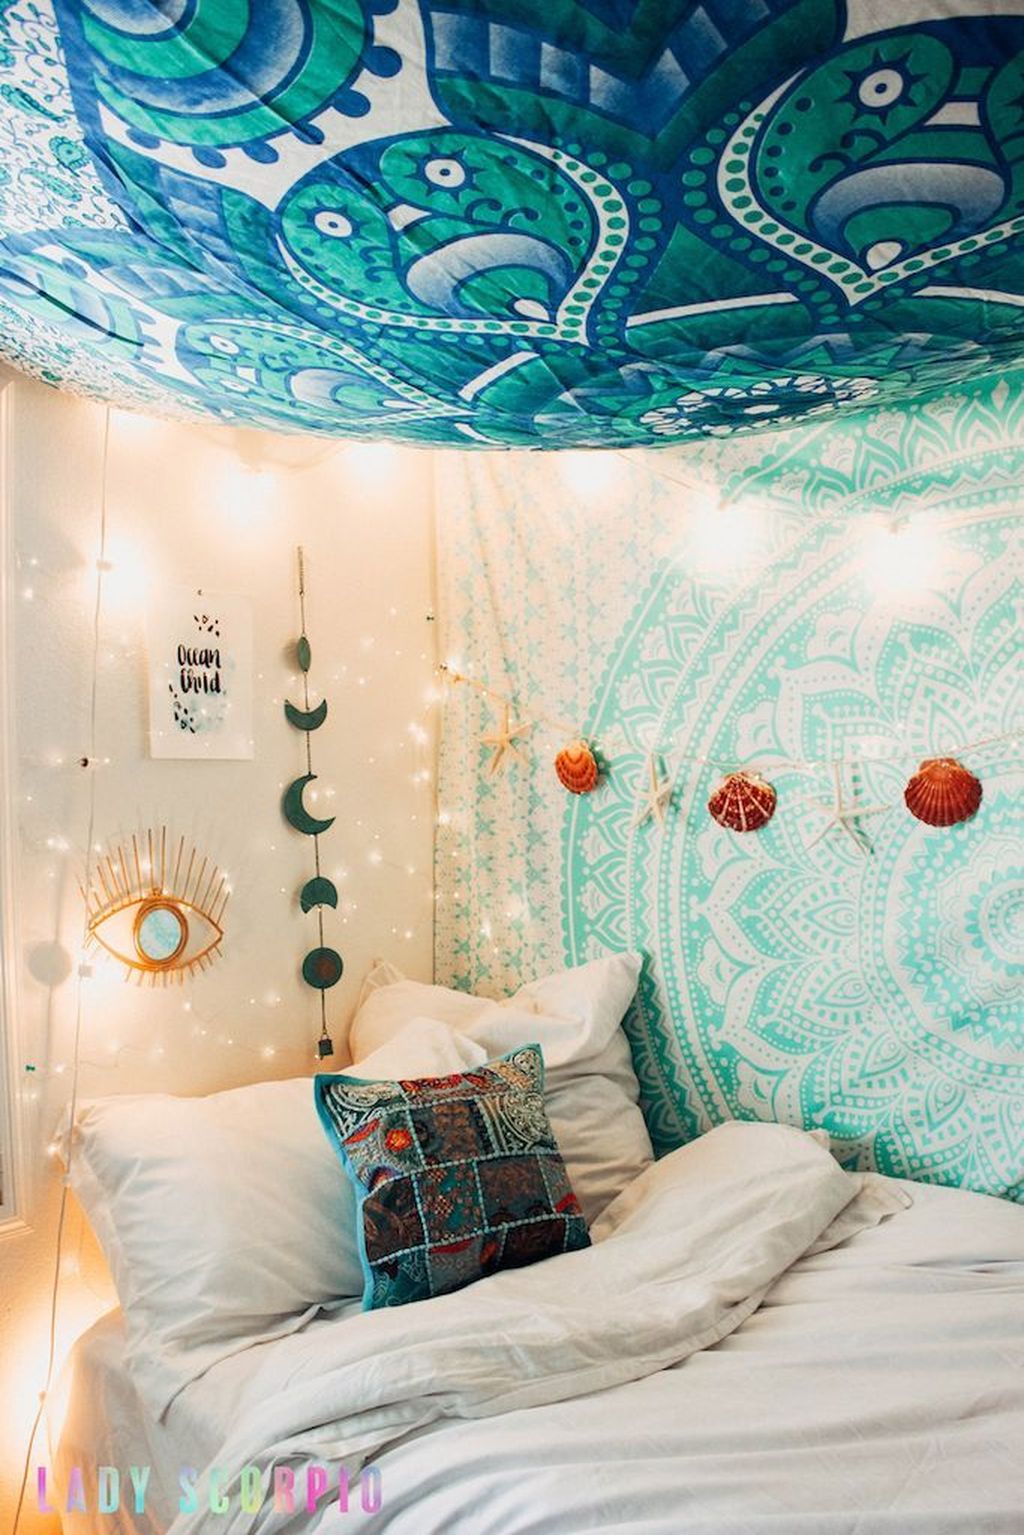 31 Beautiful Mermaid Theme Bedroom Decor Ideas For Girls - MAGZHOUSE